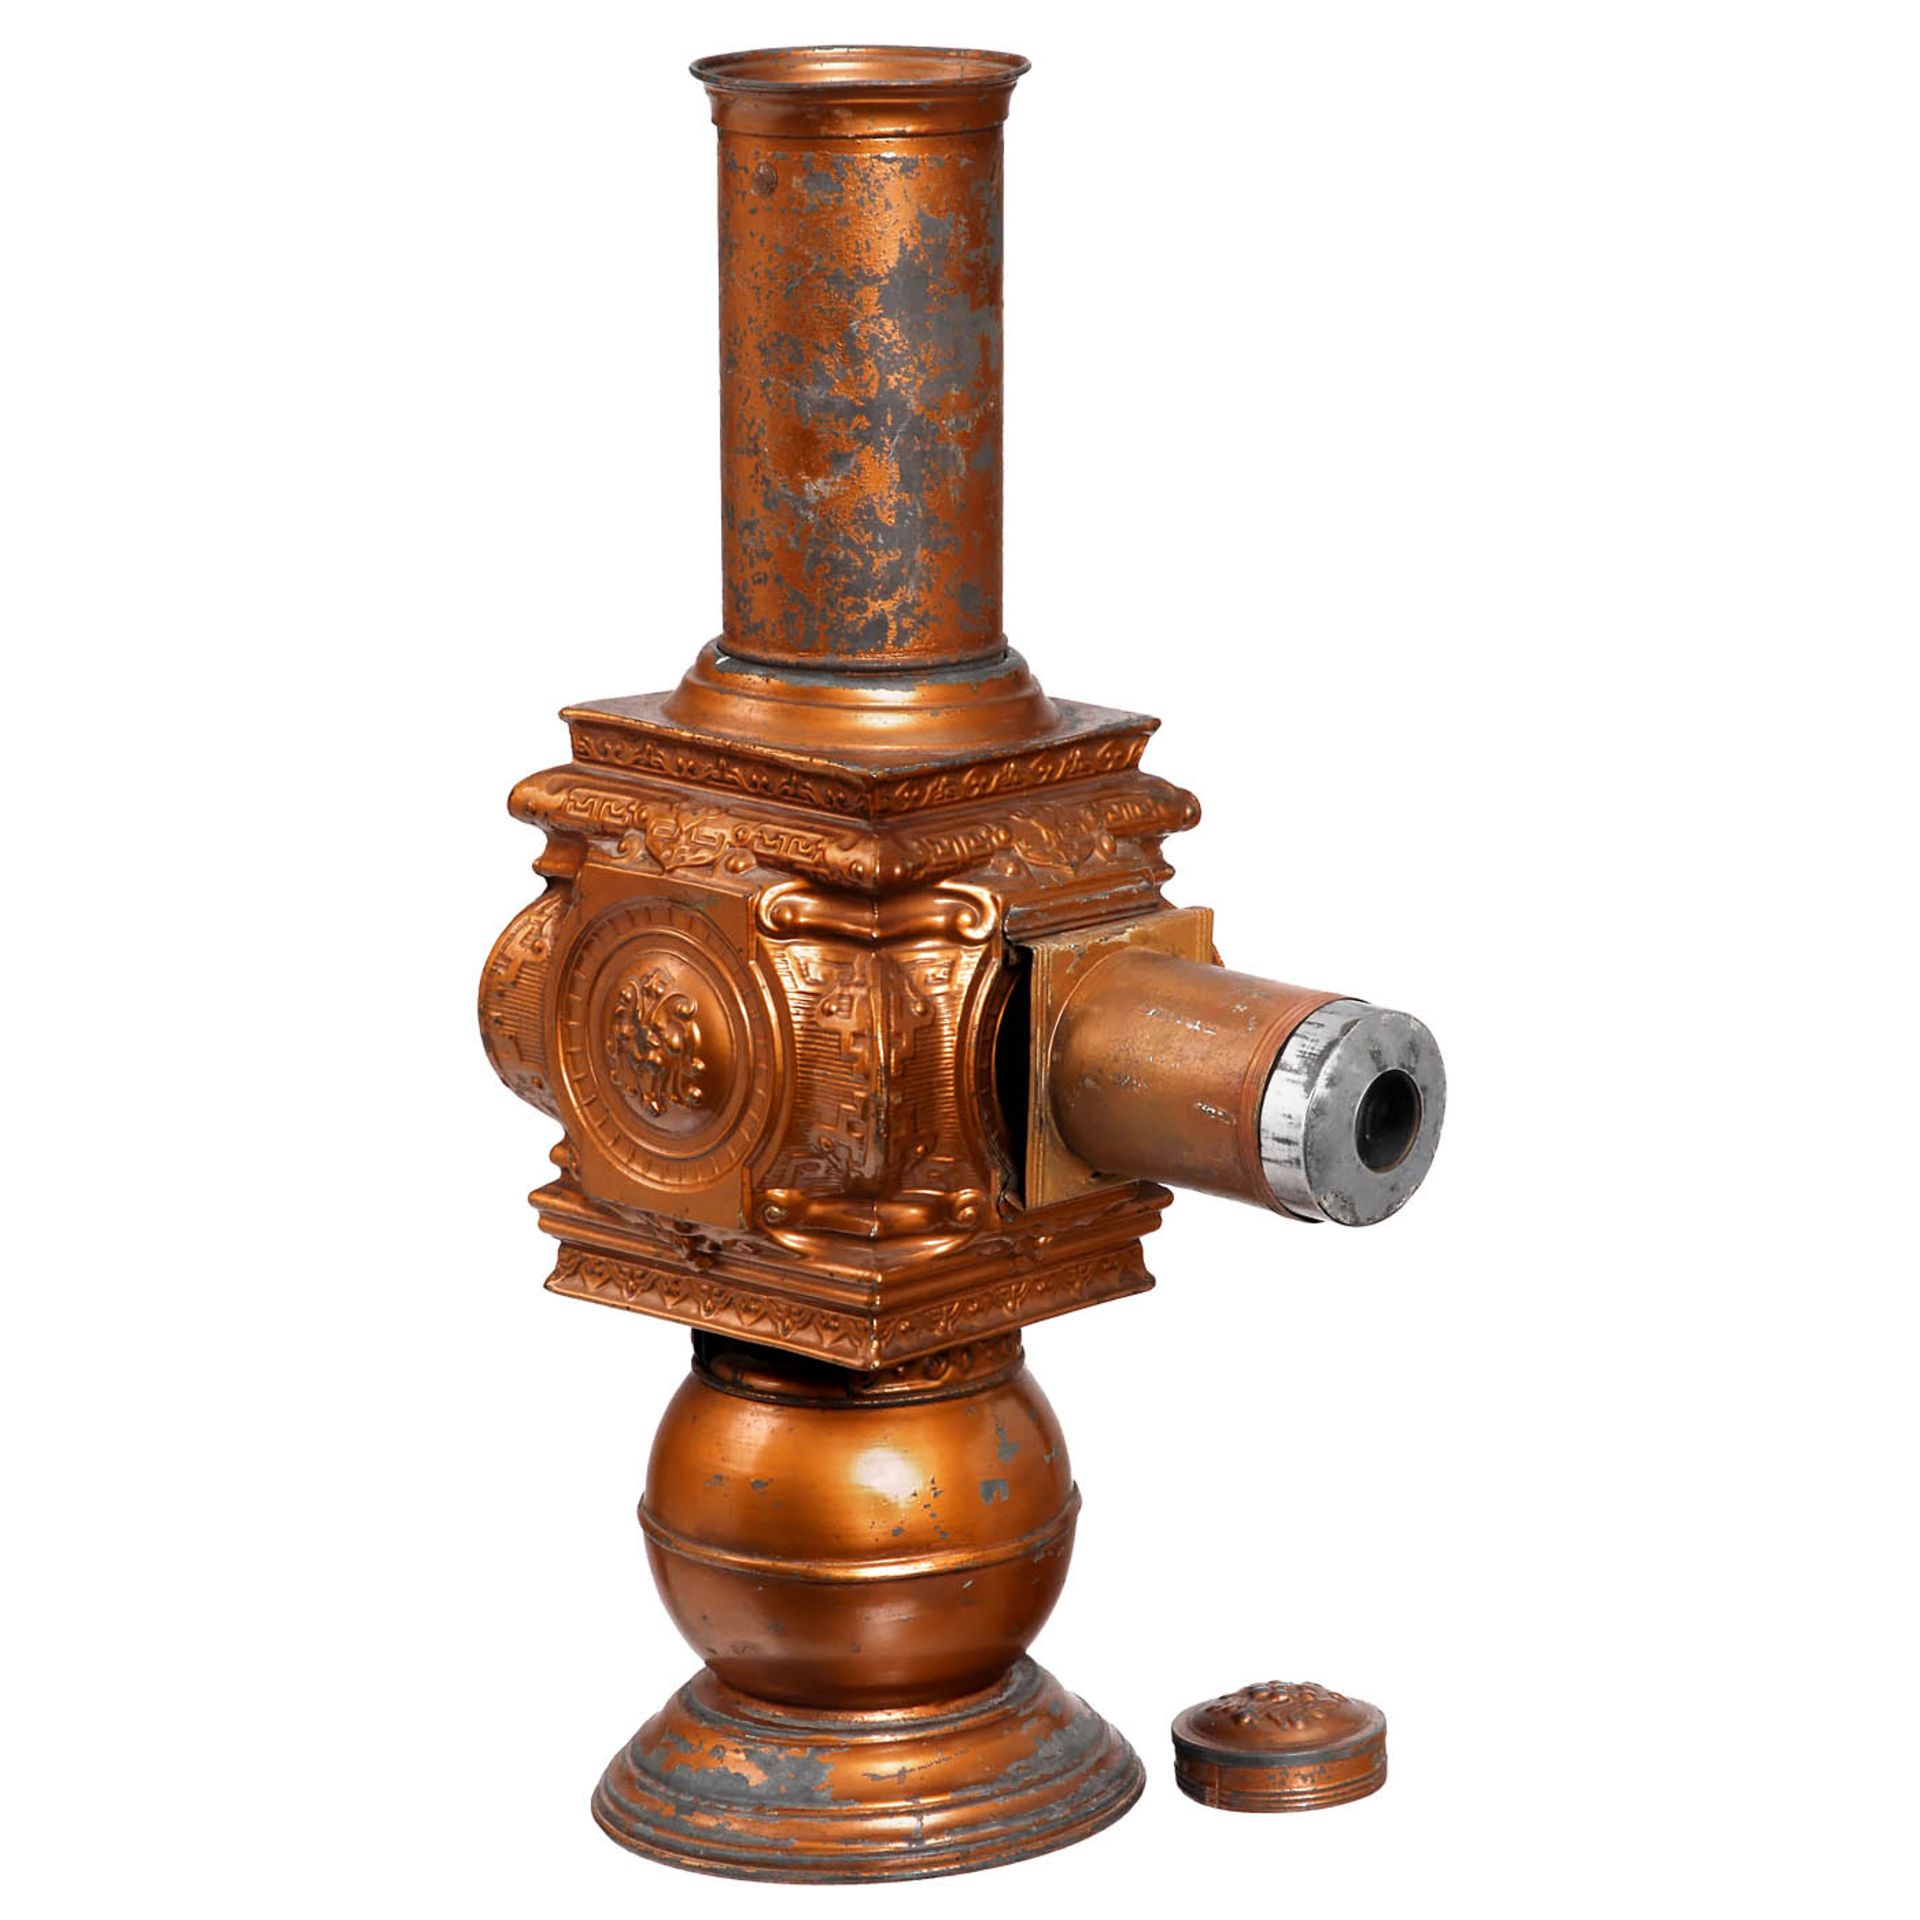 Copper-Colored "Lampadophore" Magic Lantern, c. 1893